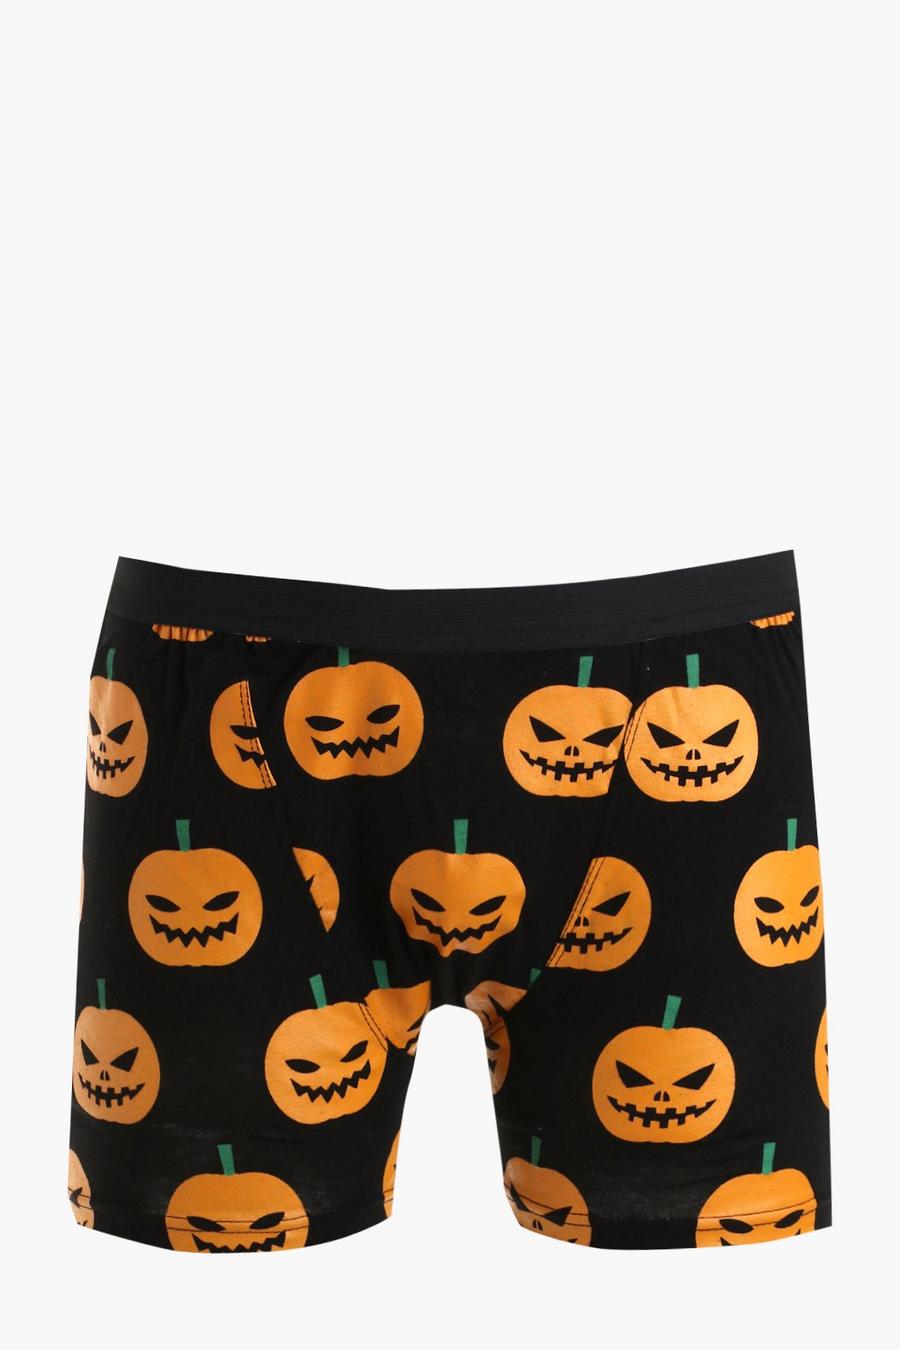 https://media.boohoo.com/i/boohoo/mzz67895_black_xl/male-black-halloween-pumpkin-print-boxers/?w=900&qlt=default&fmt.jp2.qlt=70&fmt=auto&sm=fit